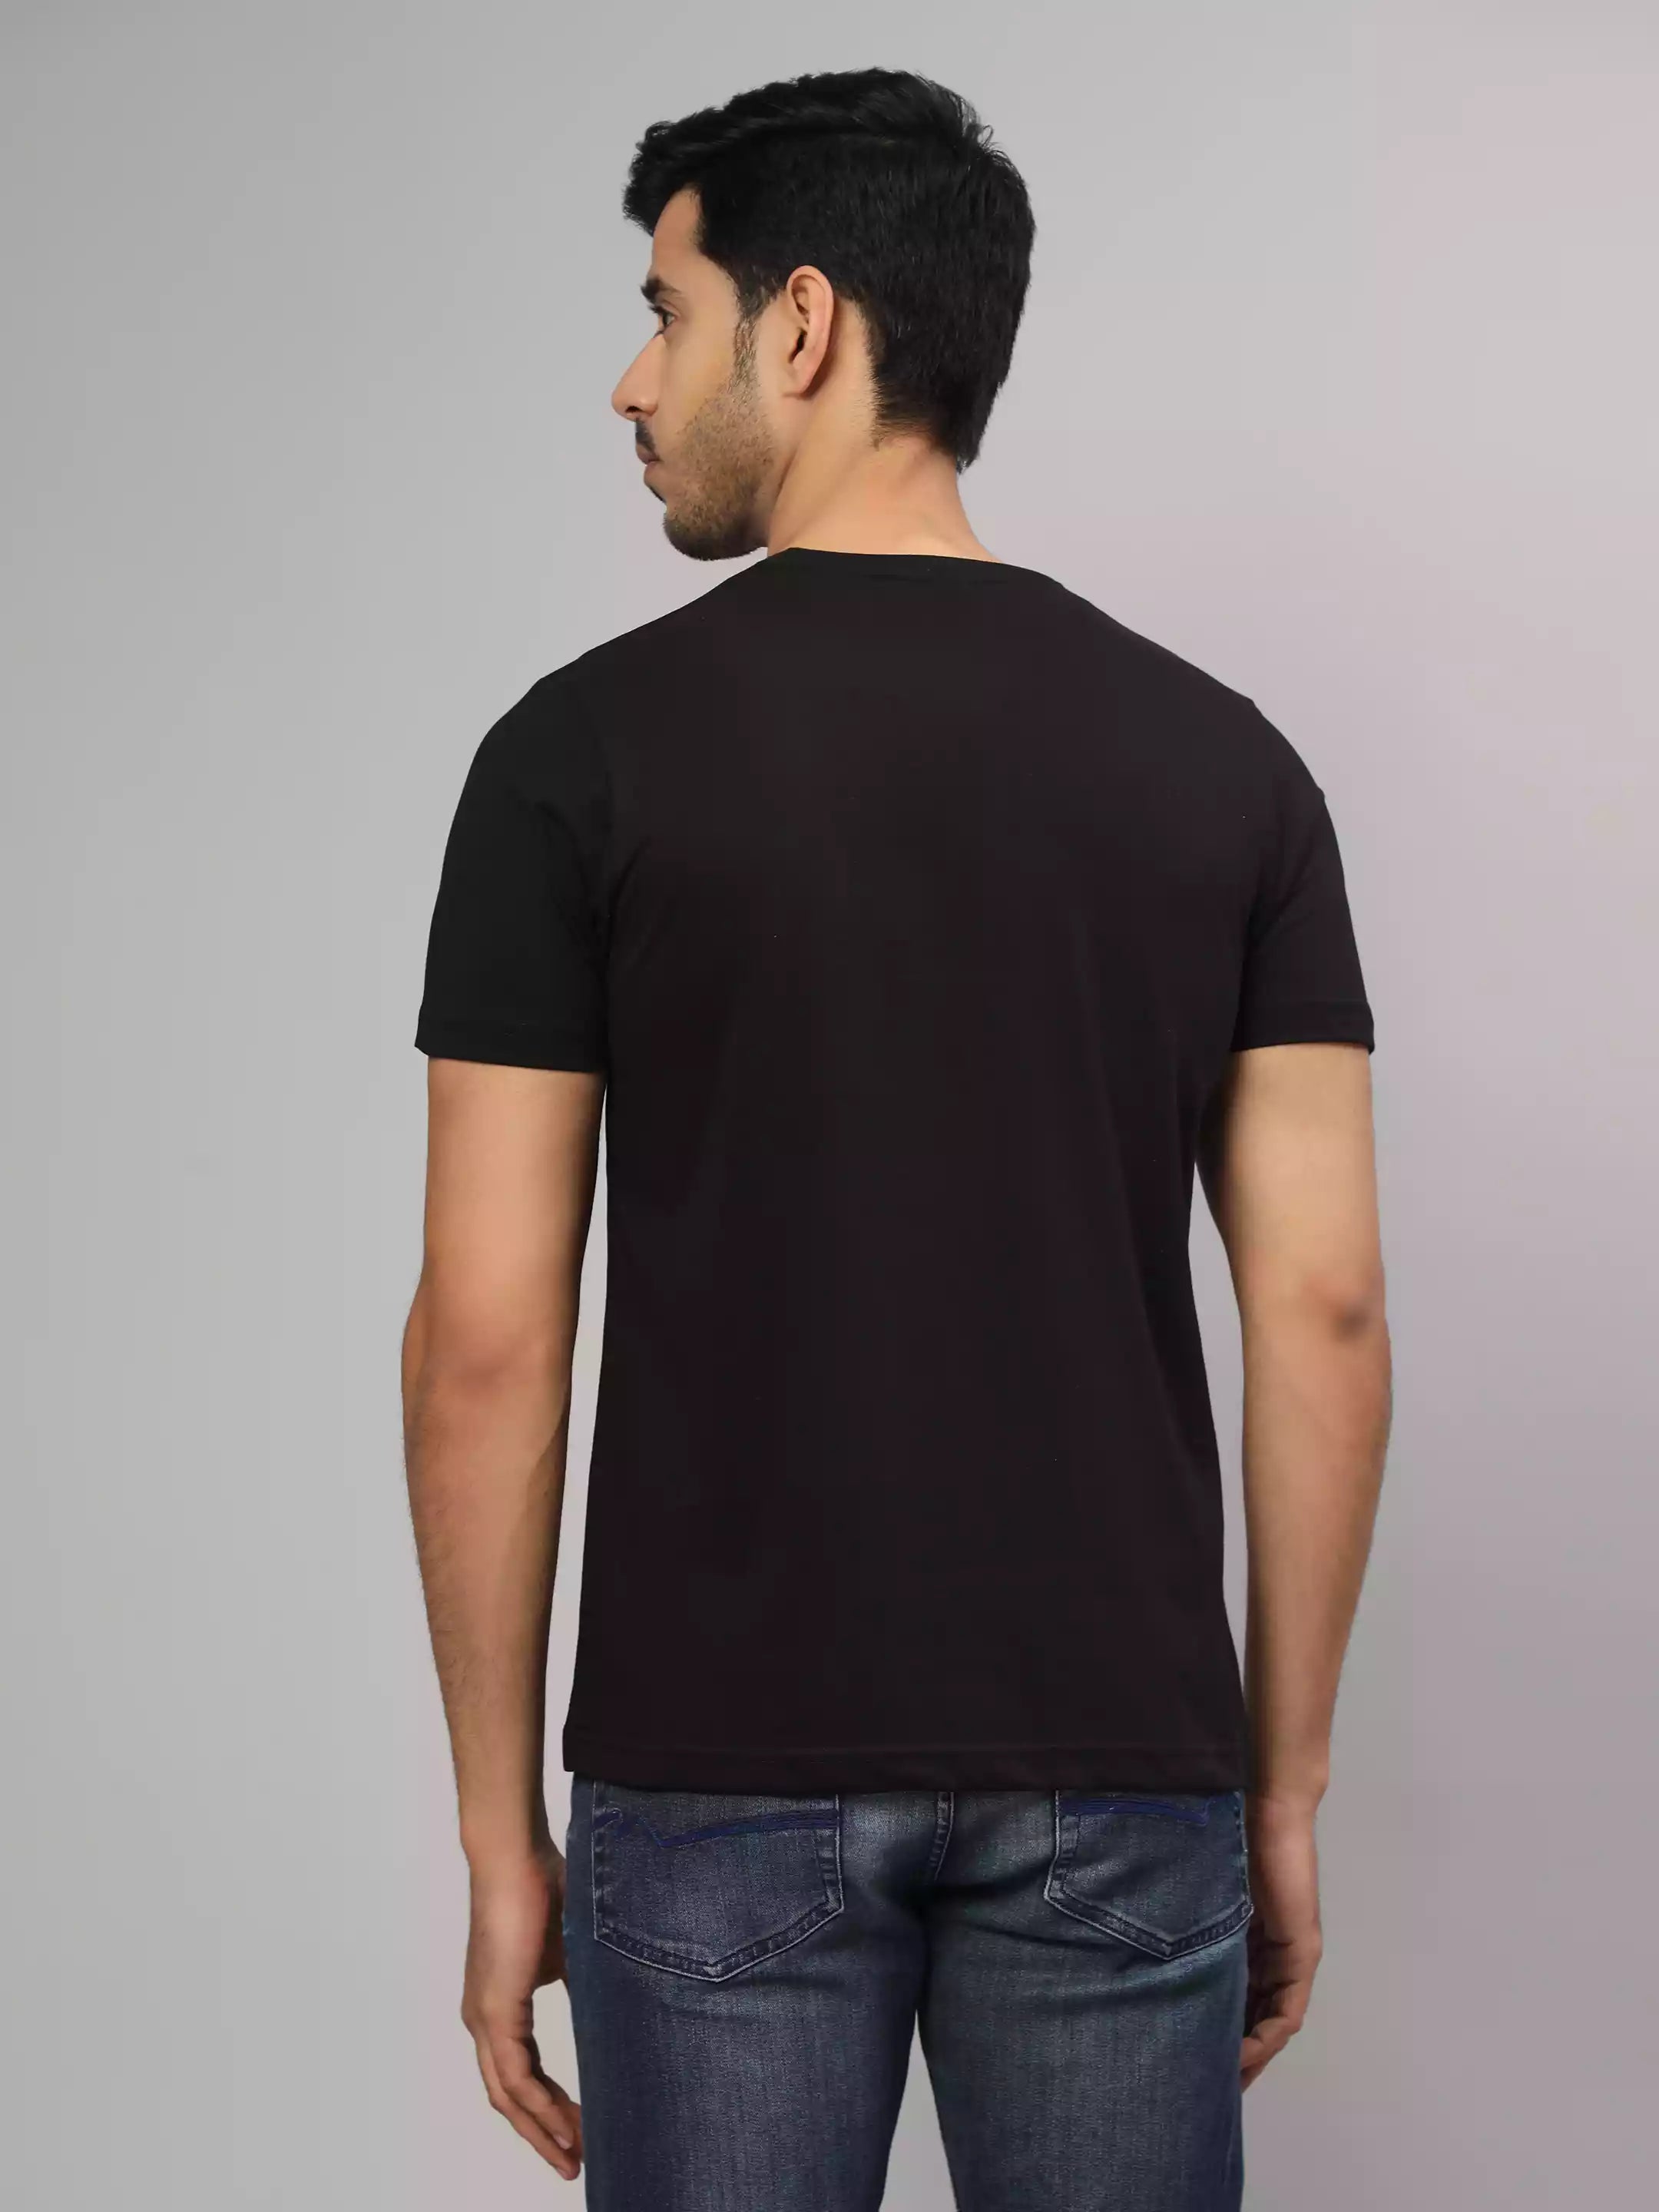 Rock till - Sukhiaatma Unisex pocket Printed Black T-shirt